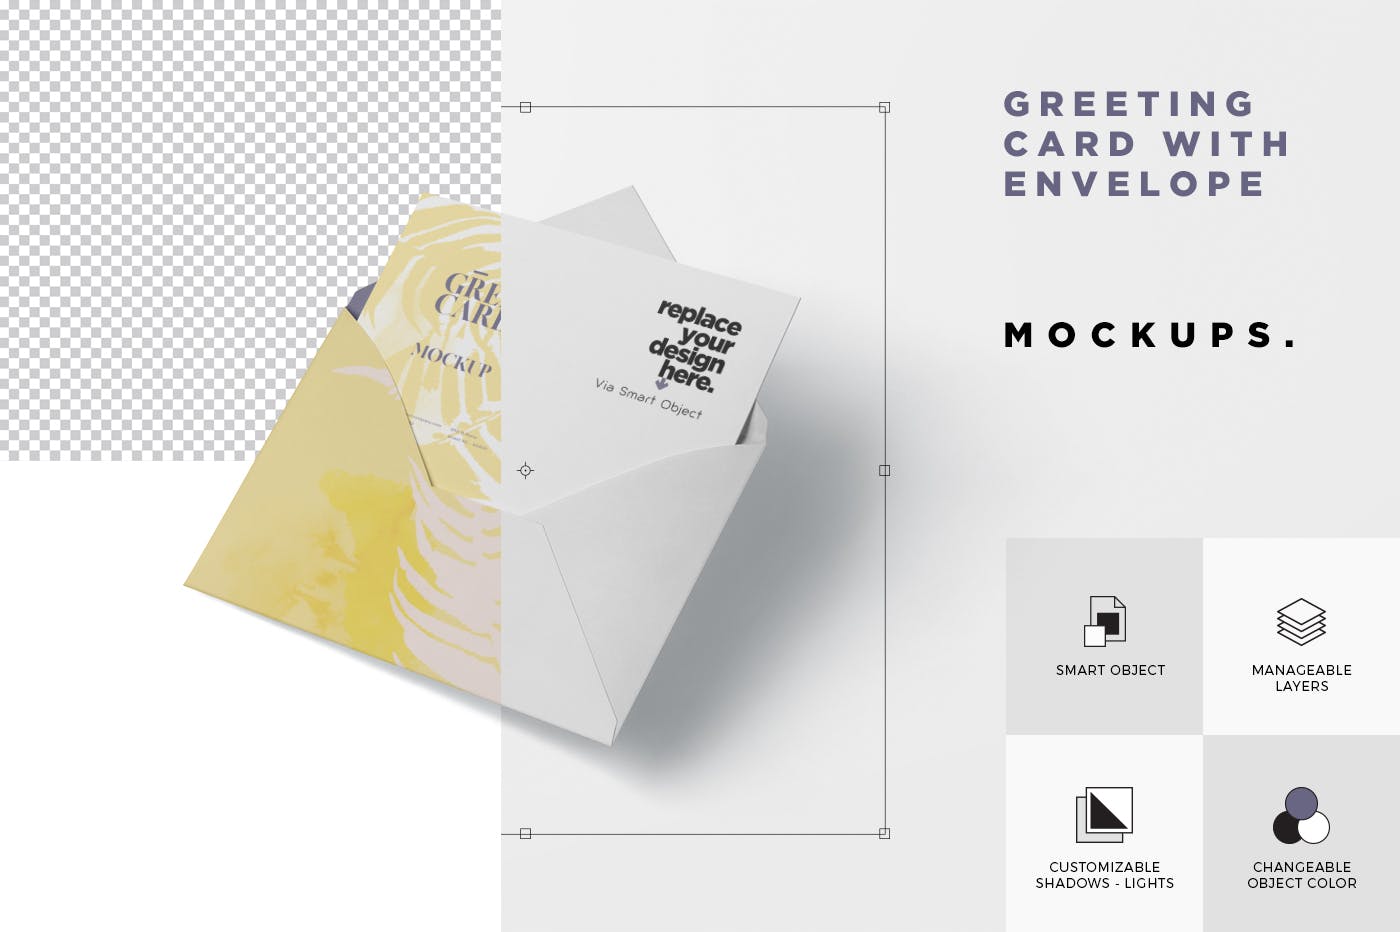 高端企业信封&贺卡设计图第一素材精选 Greeting Card Mockup with Envelope – A6 Size插图(5)